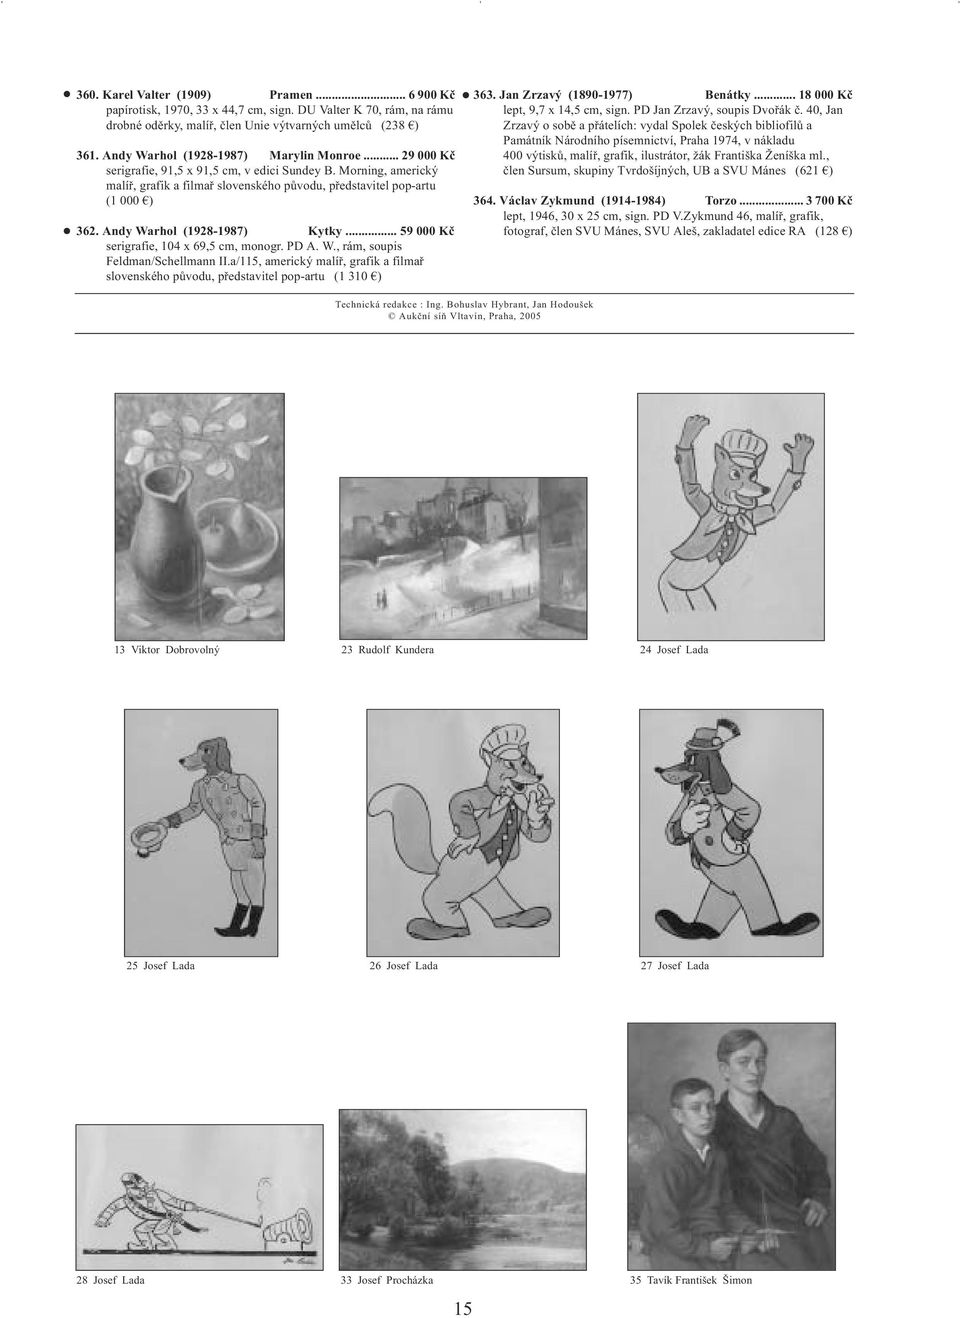 Andy Warhol (1928-1987) Kytky... 59 000 Kč serigrafie, 104 x 69,5 cm, monogr. PD A. W., rám, soupis Feldman/Schellmann II.